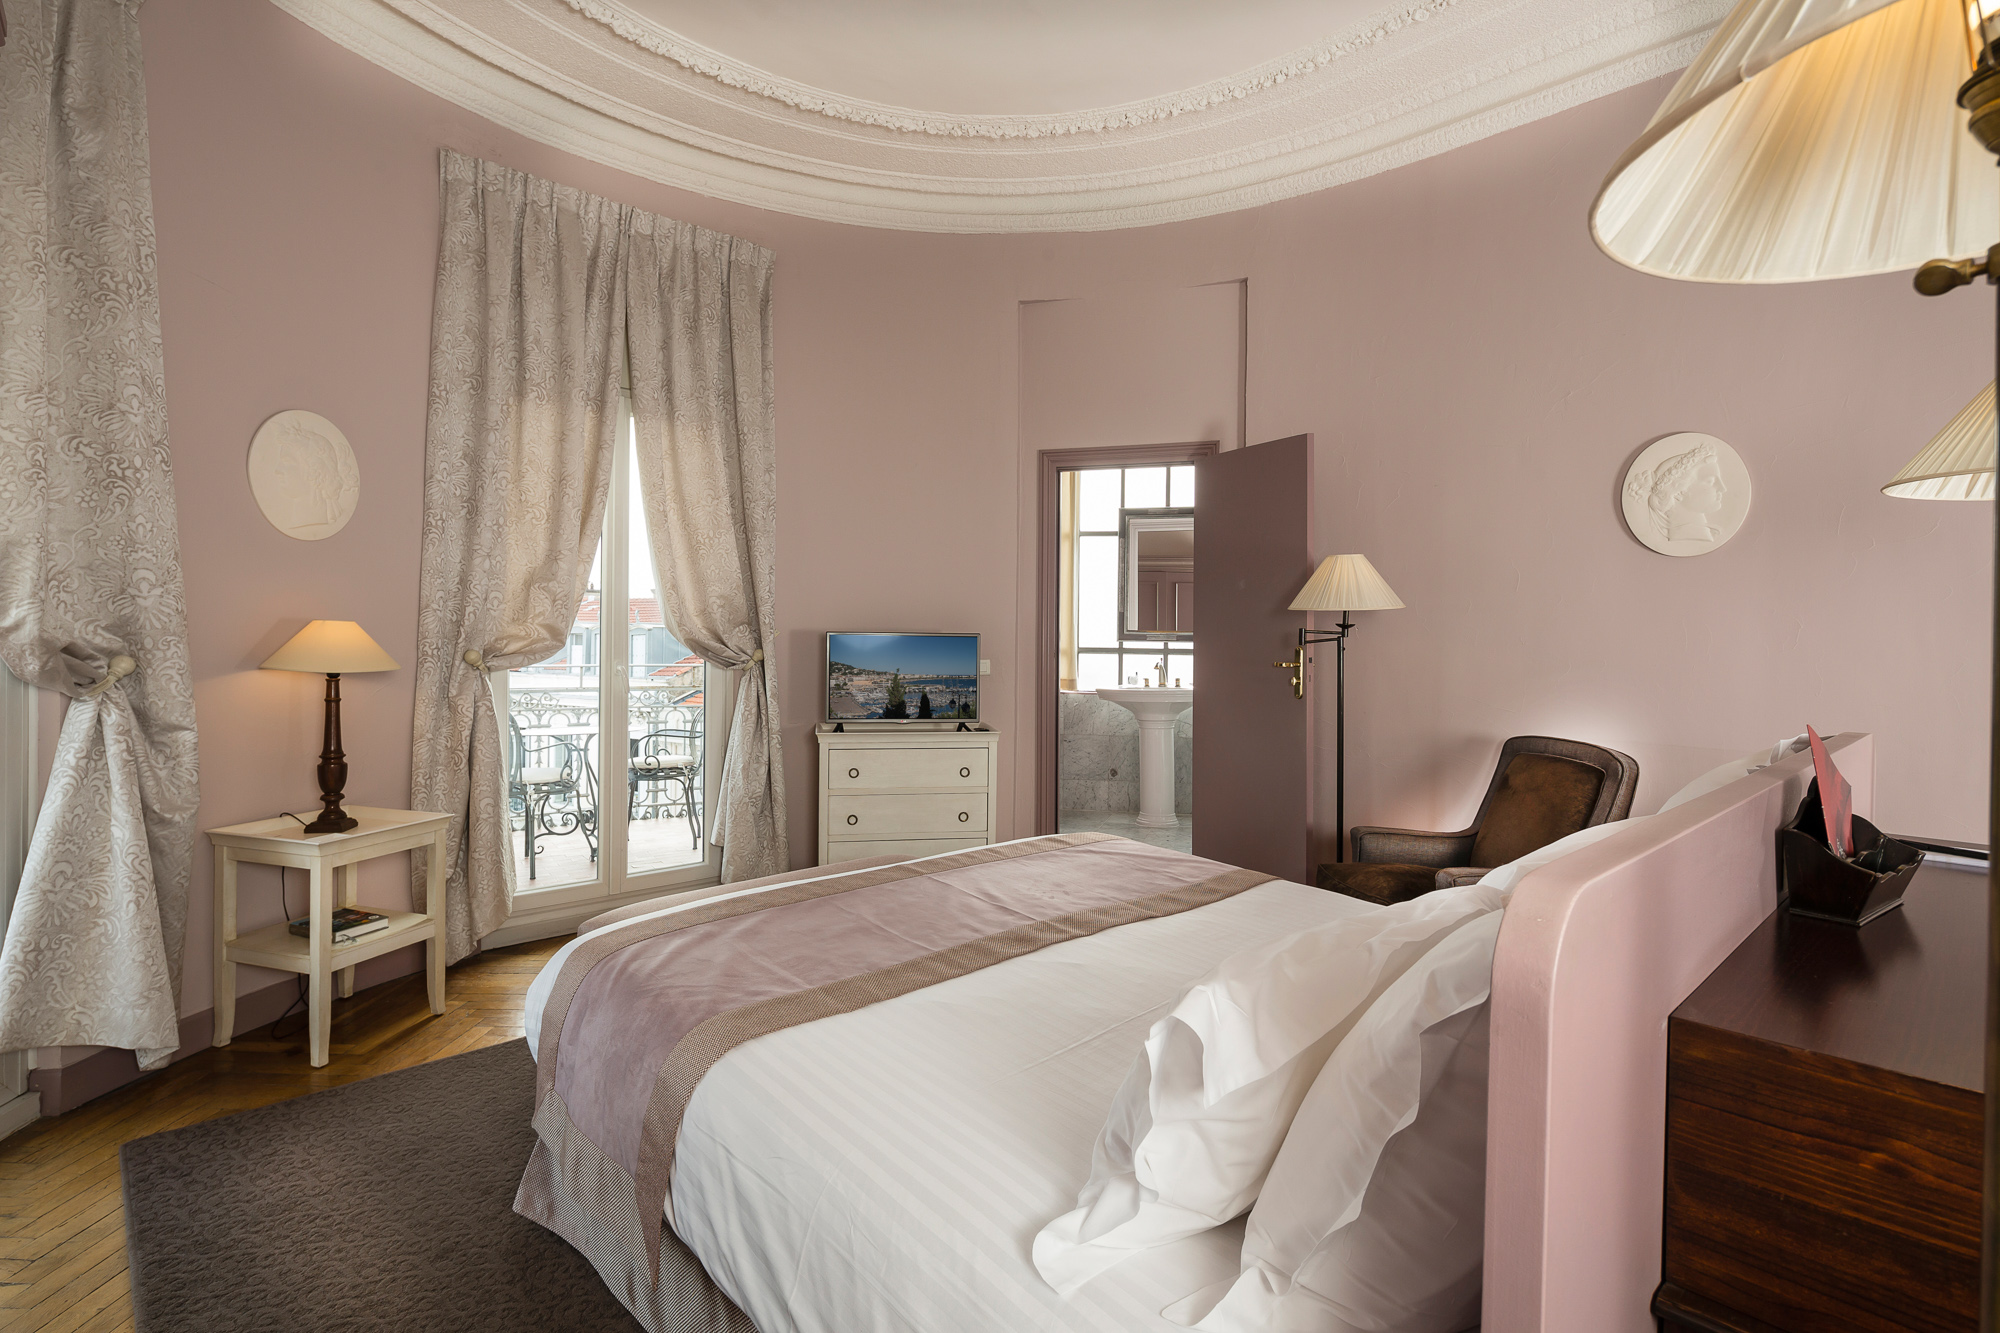 golf-expedition-golf-reizen-frankrijk-regio-cote-d'azur-hotel-le-cavendish-ronde-slaapkamer-met-badkamer-en-balkon